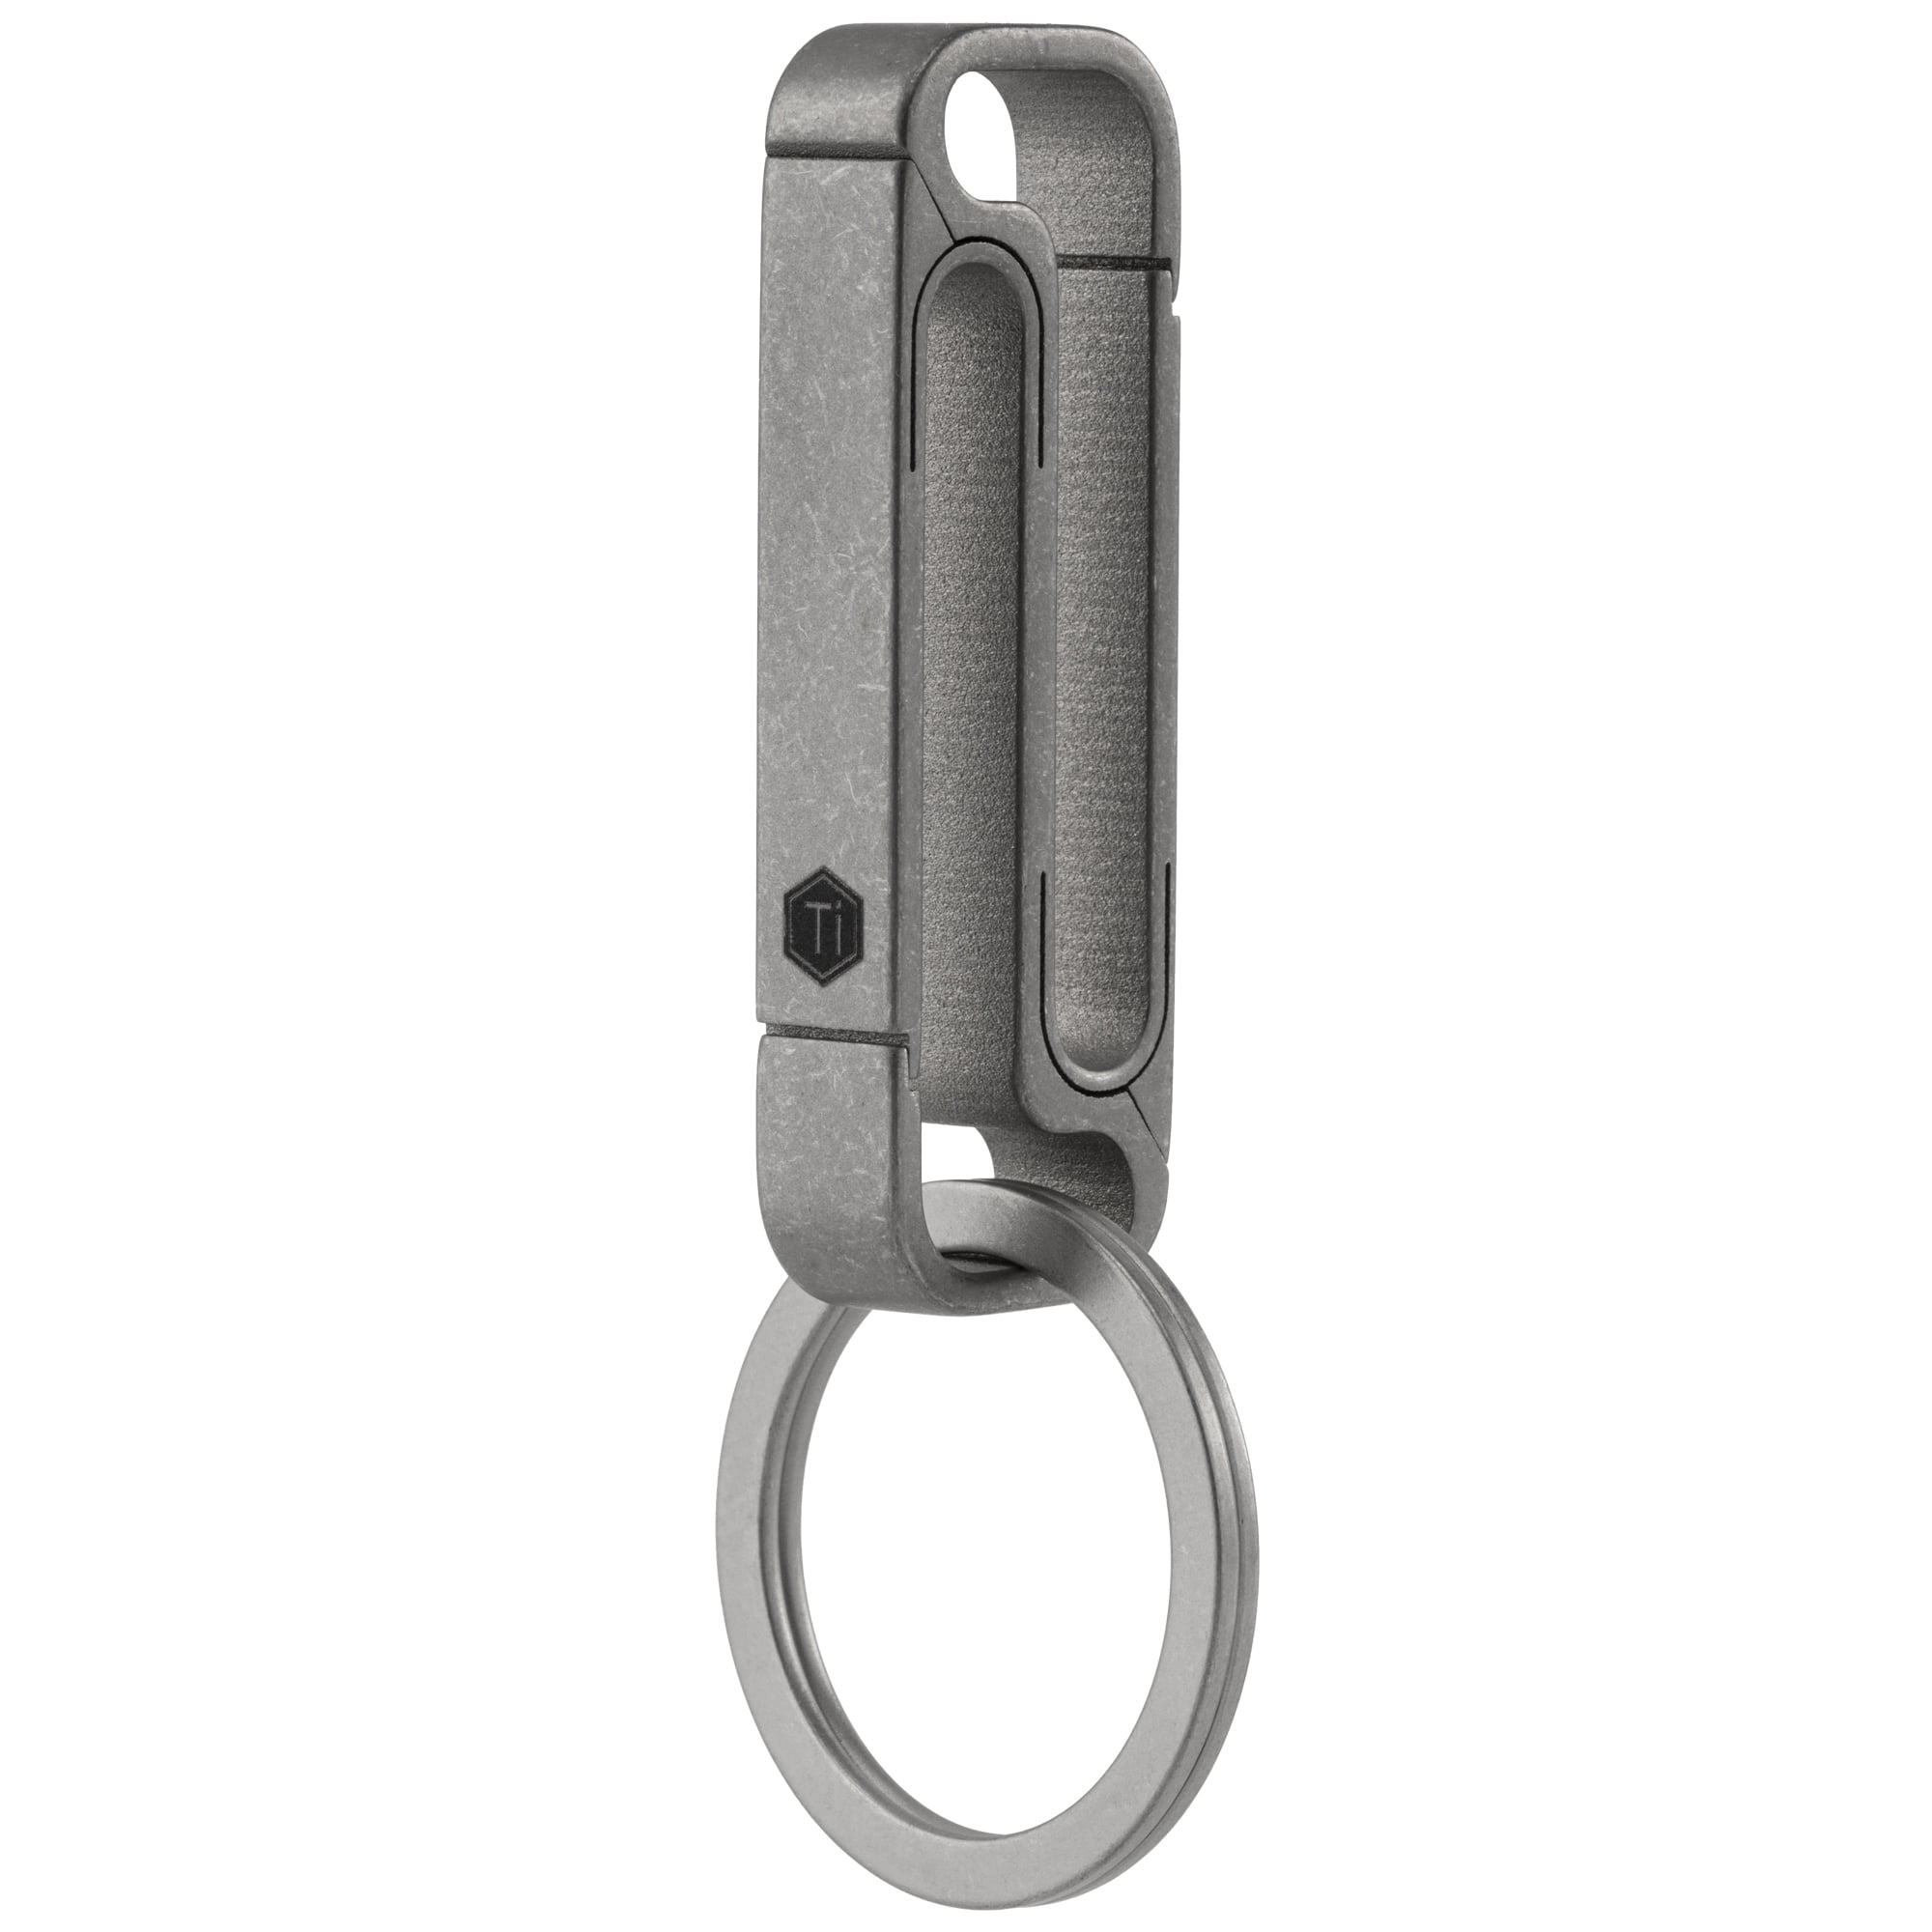 KeyUnity Double Side Carabiner Keychain Clip, Titanium Belt Key